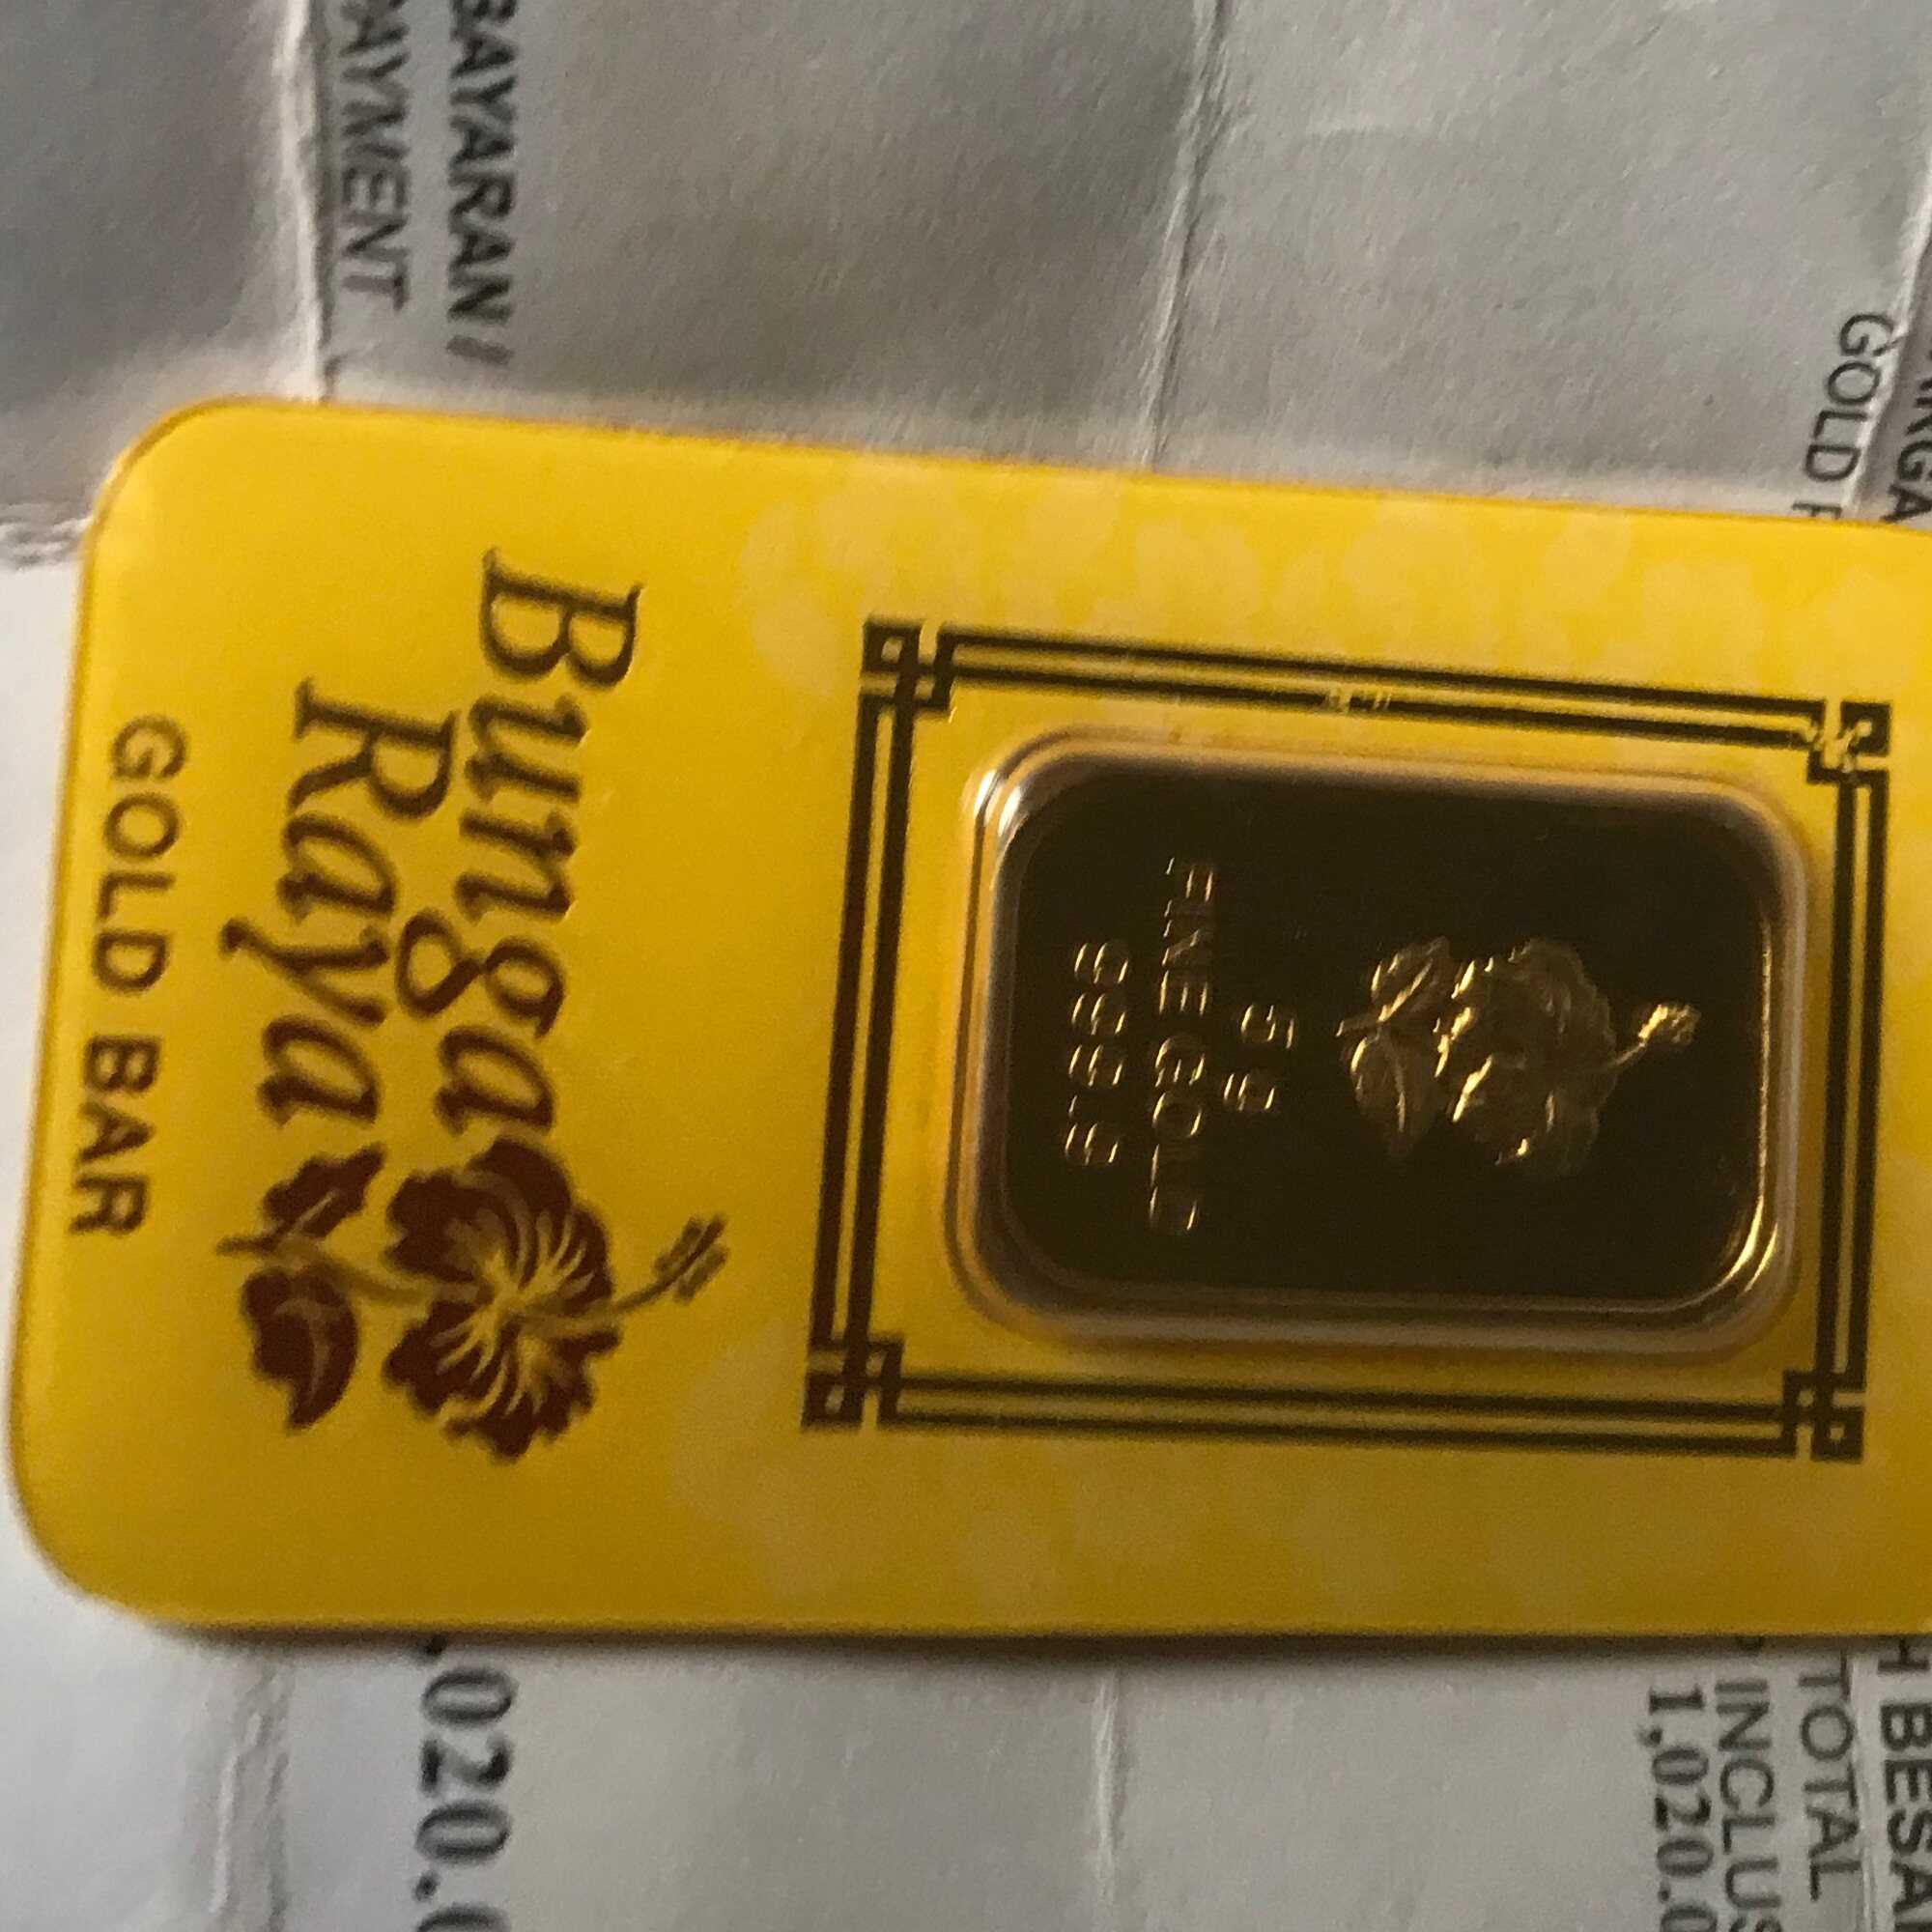 Poh Kong Gold Price Promotion Apr 2021 Biggo Malaysia